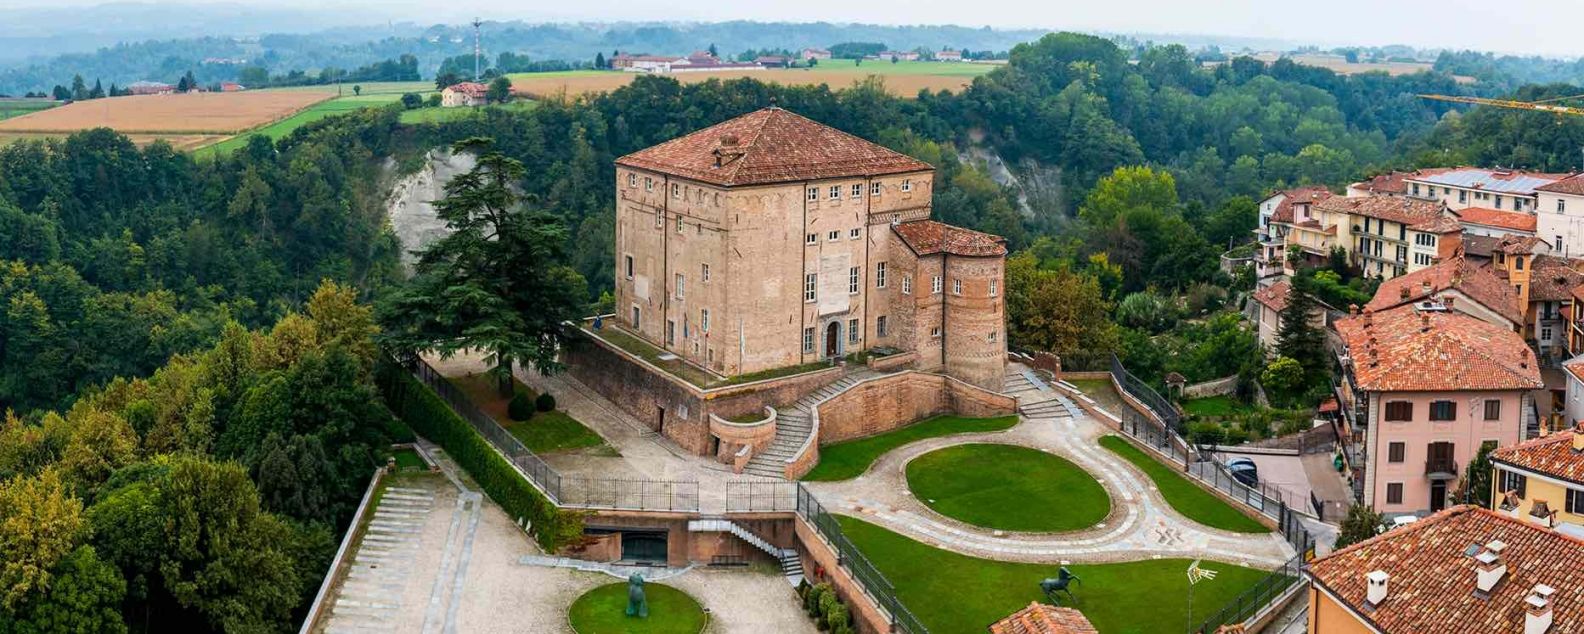 Castello di Carrù en la provincia de Cuneo, Italia